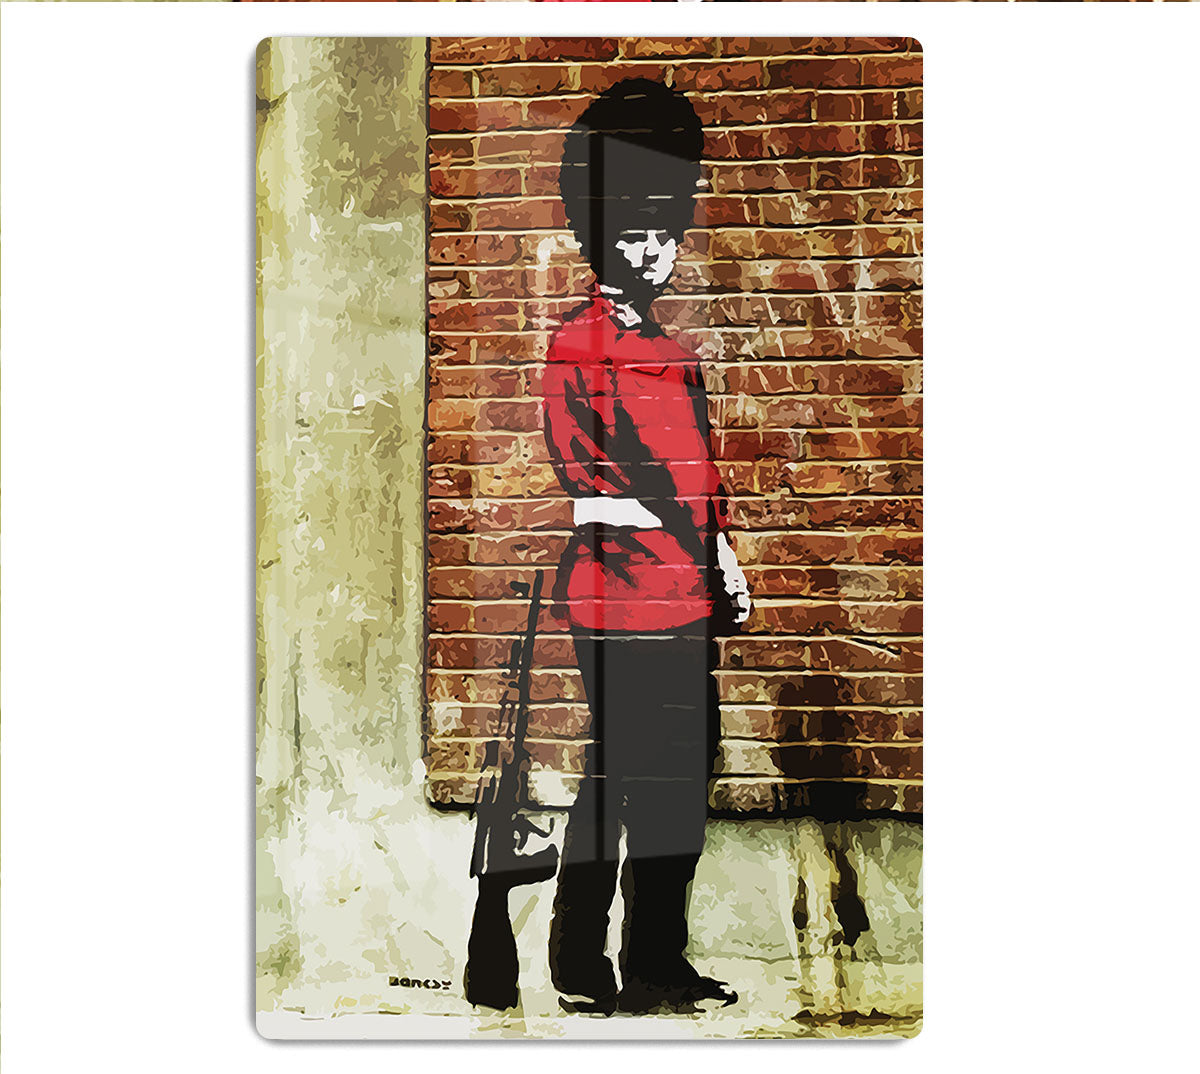 Banksy Pissing London Soldier HD Metal Print - Canvas Art Rocks - 1